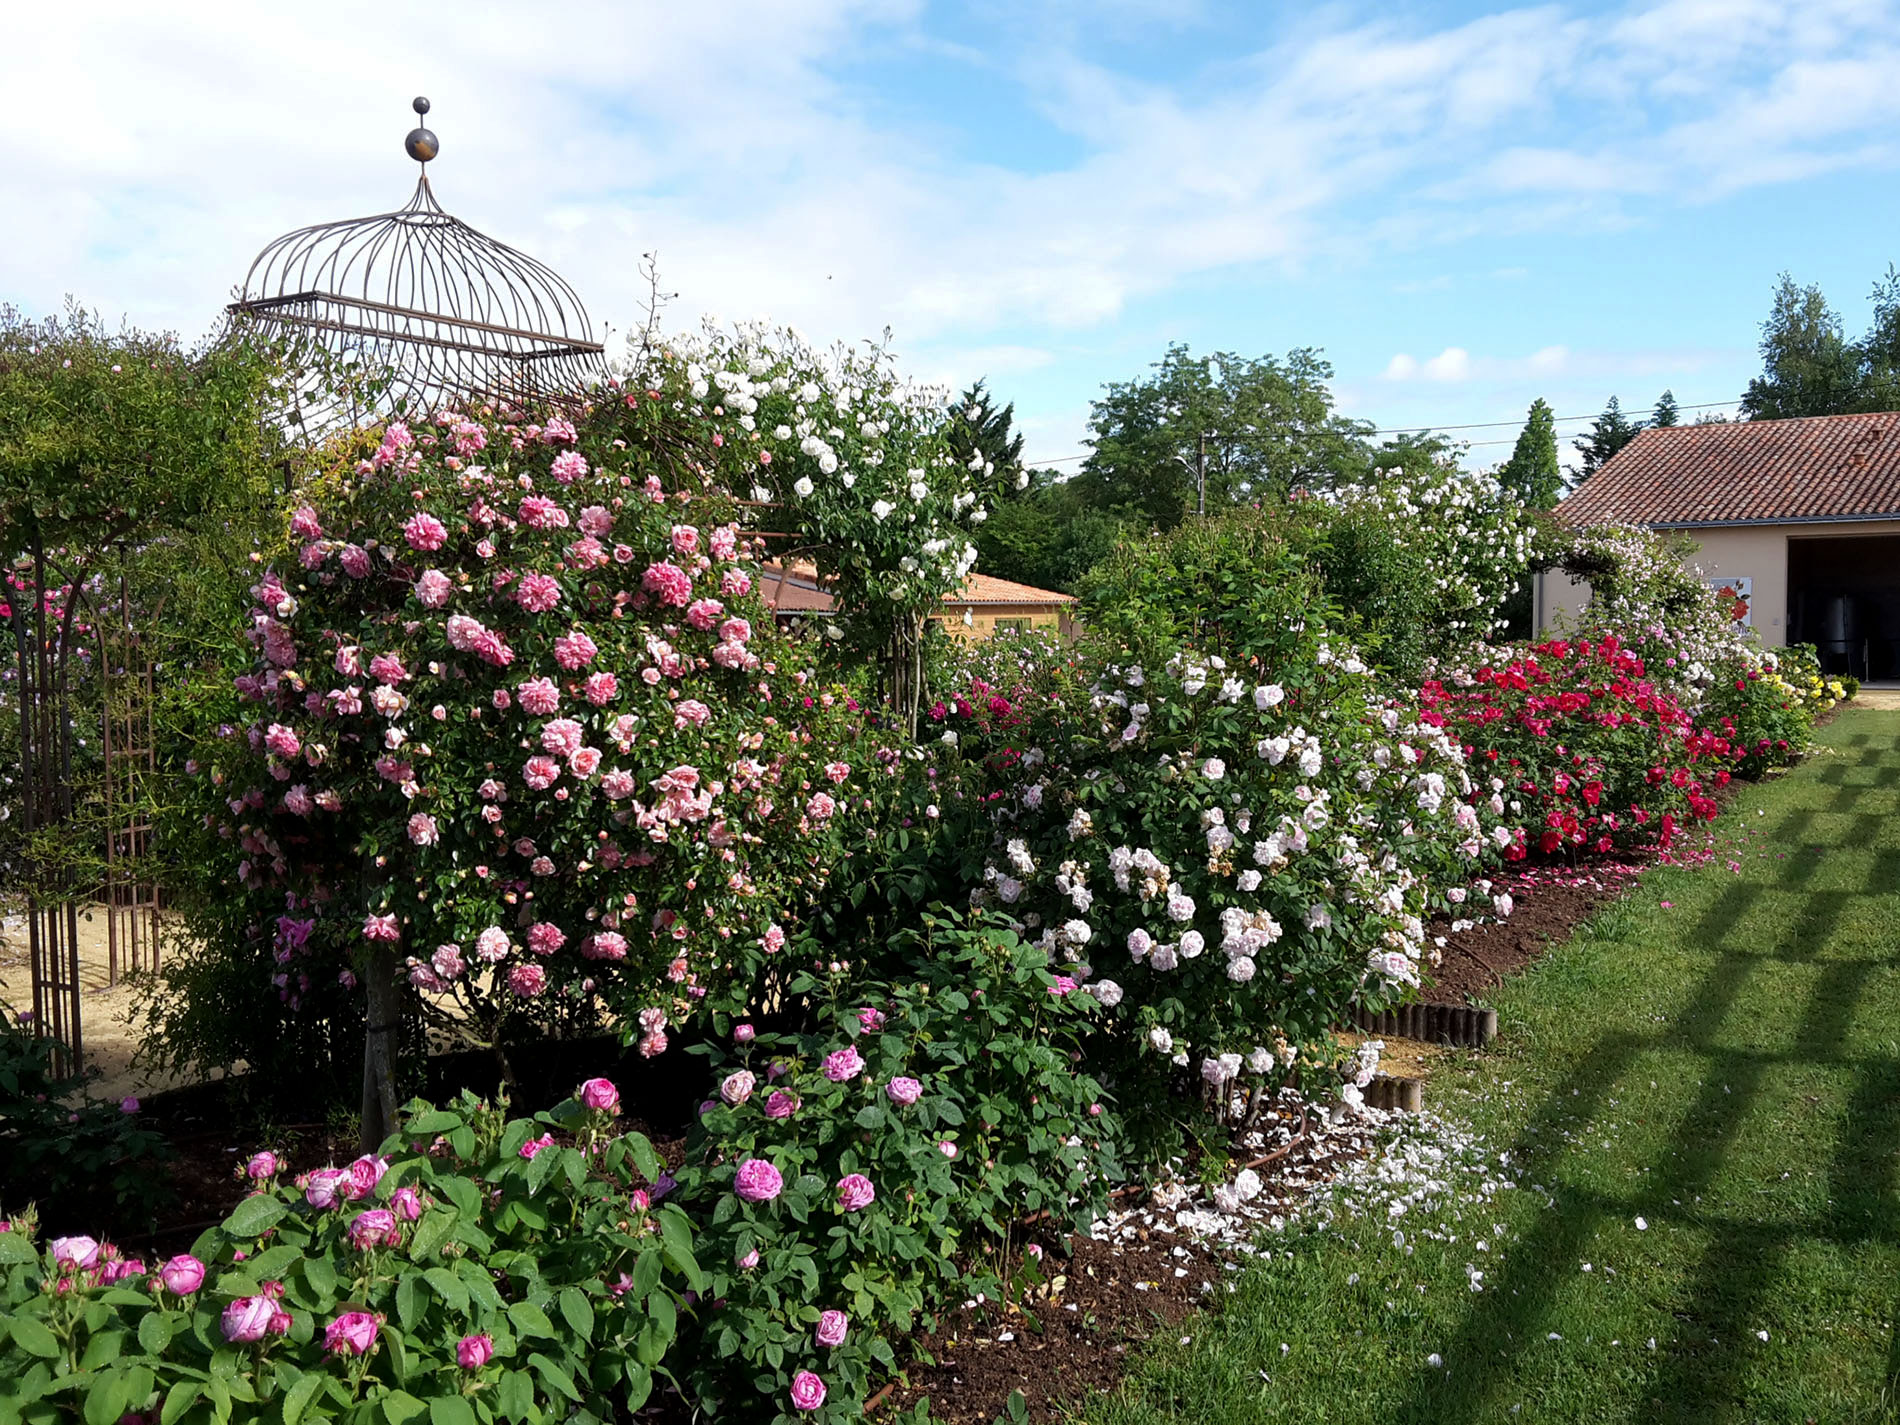 The Rose Garden : Visit the Rose Garden of Rose Land - Sightseeing